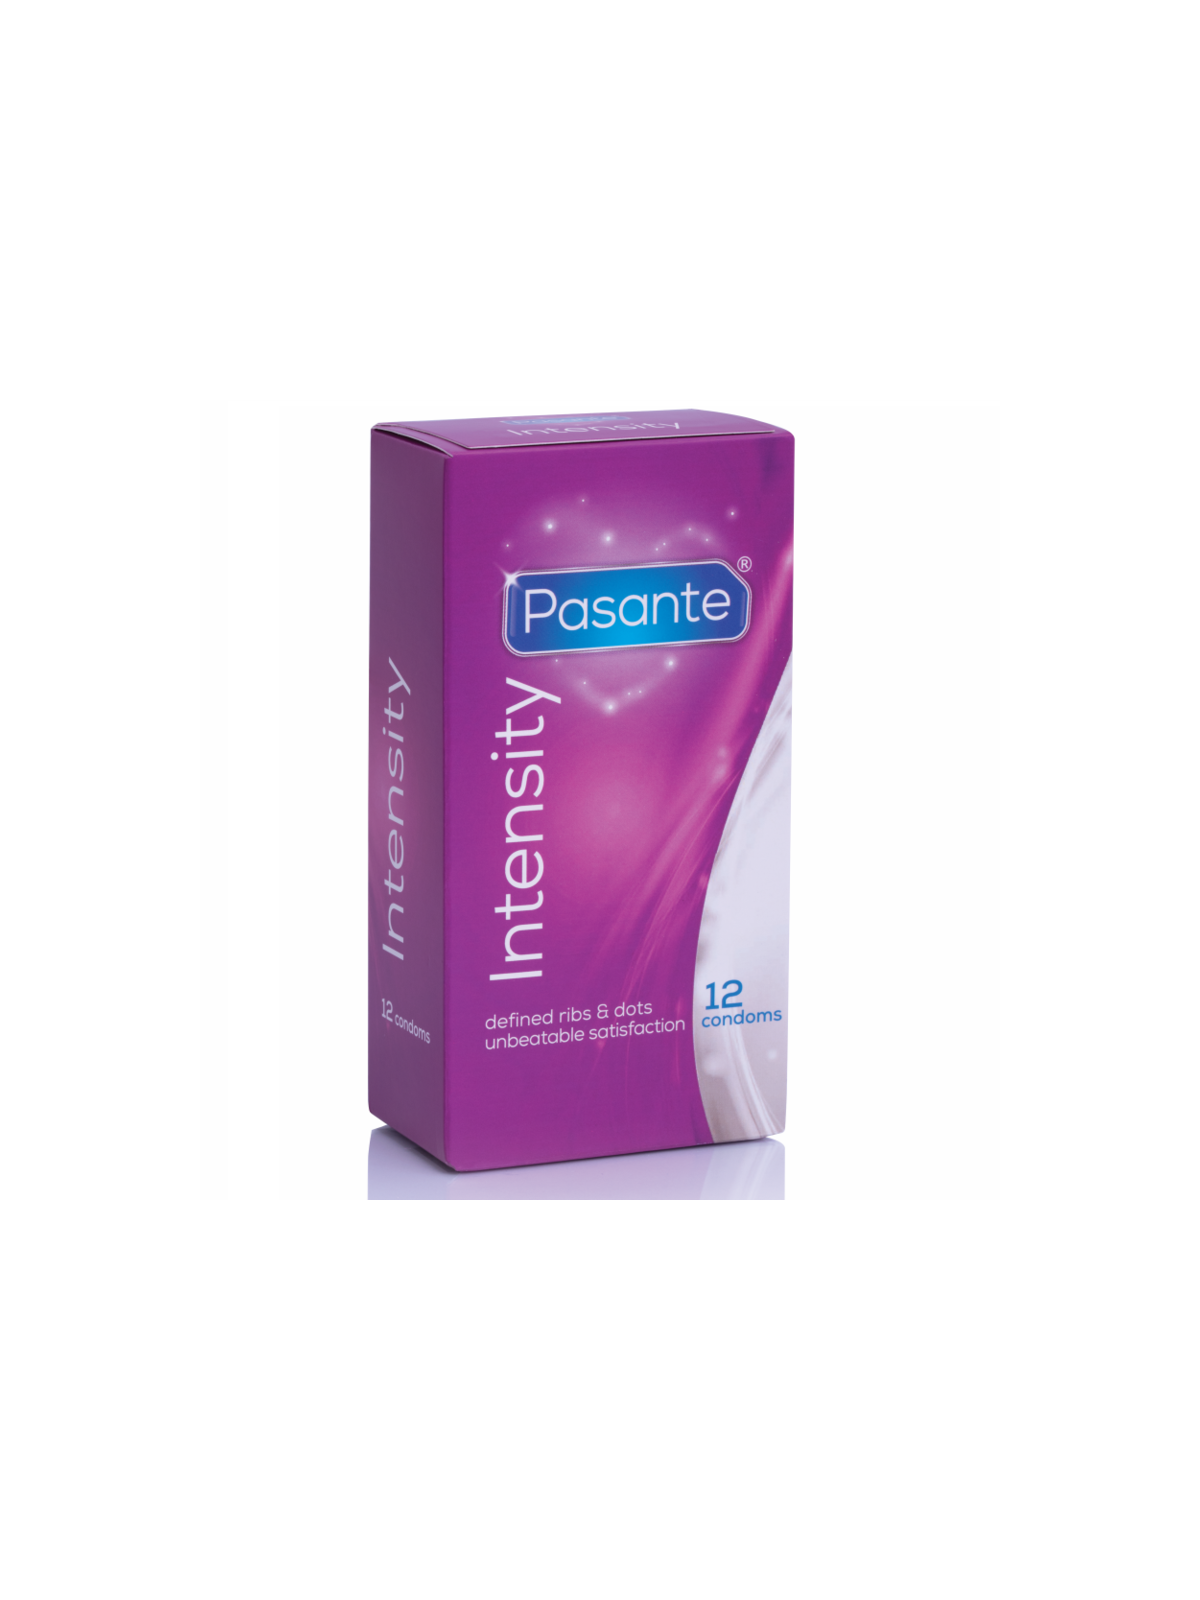 Pasante Puntos & Estrías Intensity - Comprar Condones textura Pasante - Preservativos texturizados (1)